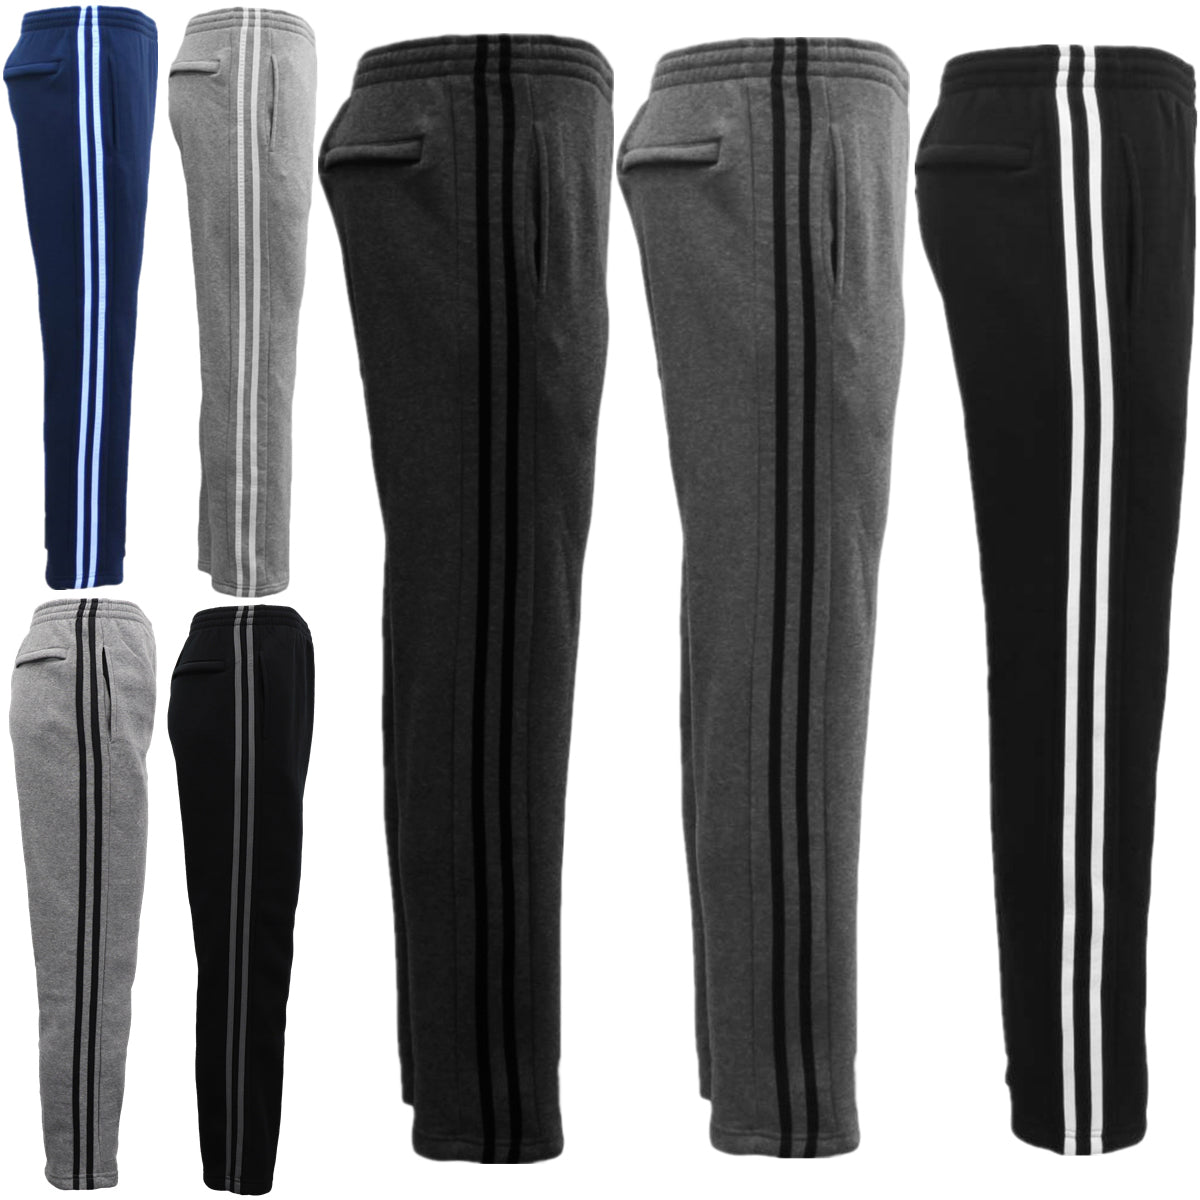 Men's Fleece Casual Sports Track Pants w Zip Pocket Striped Sweat Trousers S-6XL, Black w Grey Stripes, 2XL